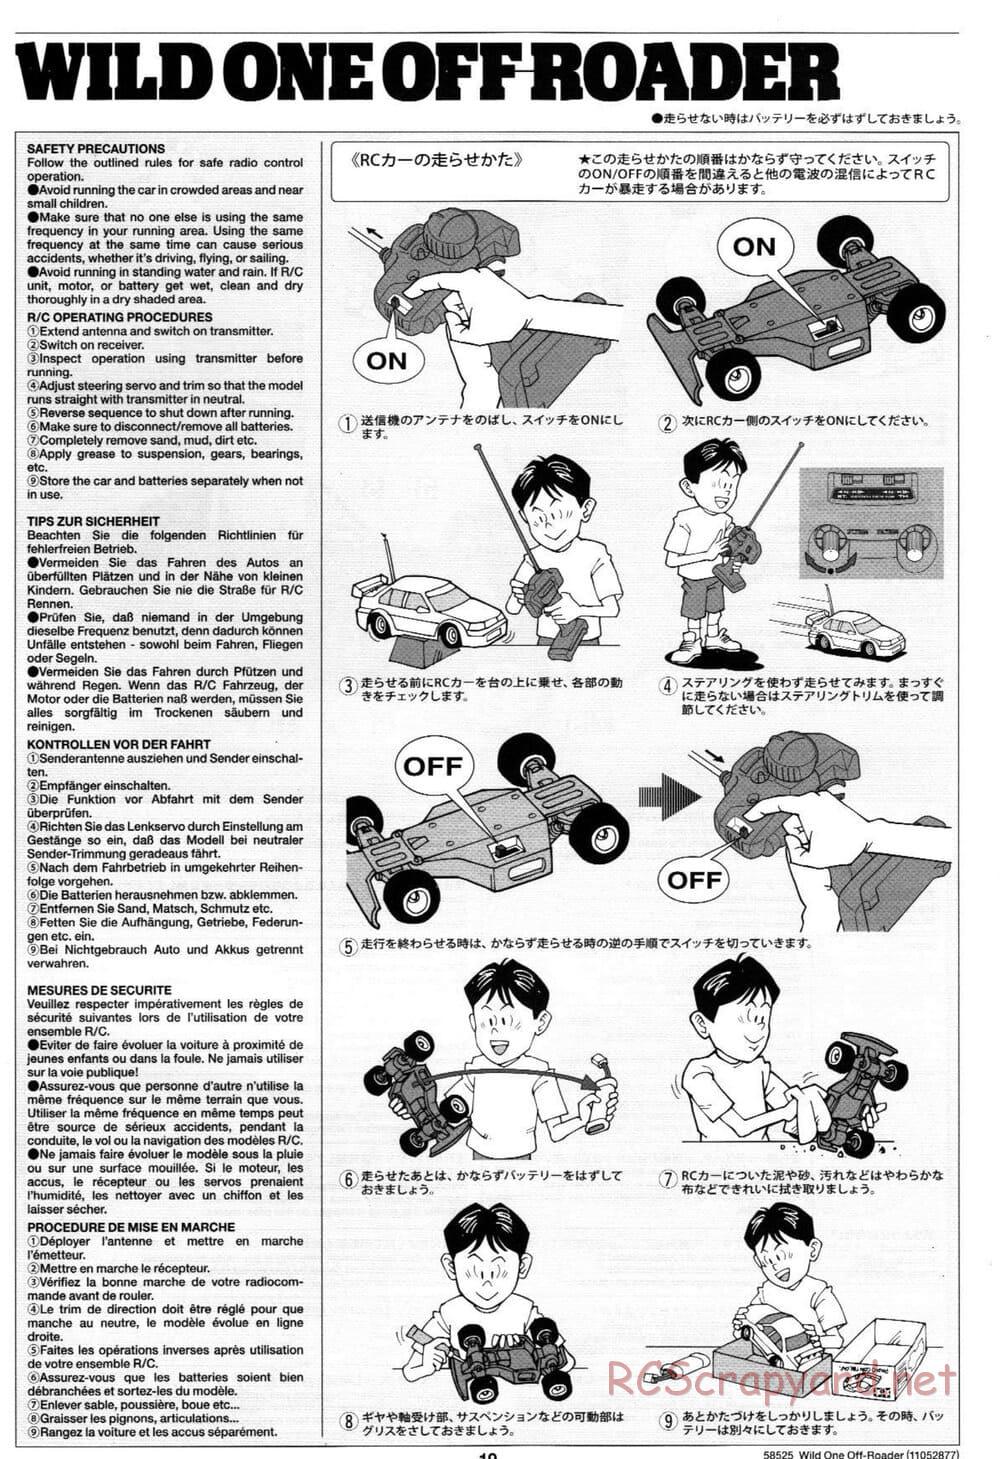 Tamiya - Wild One Off-Roader - FAV Chassis - Manual - Page 19